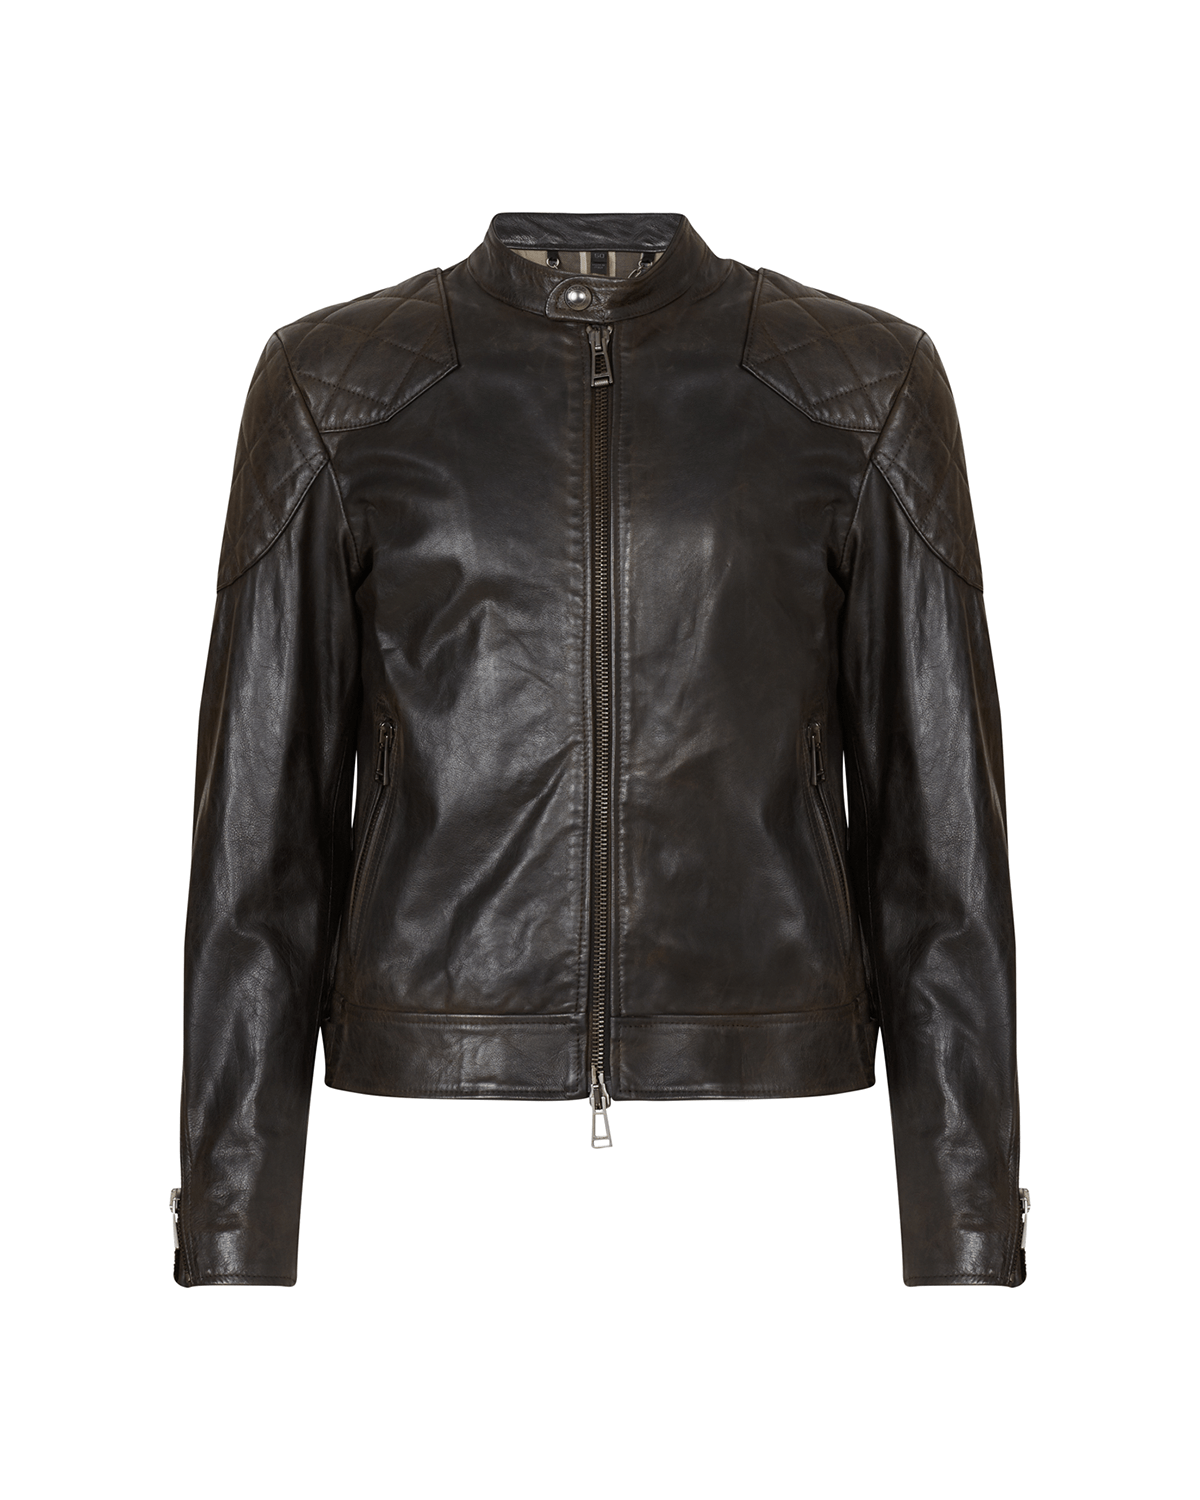 Dollar Vermaken AIDS Belstaff Outlaw Men's Leather Biker Jacket Black - Linea Fashion